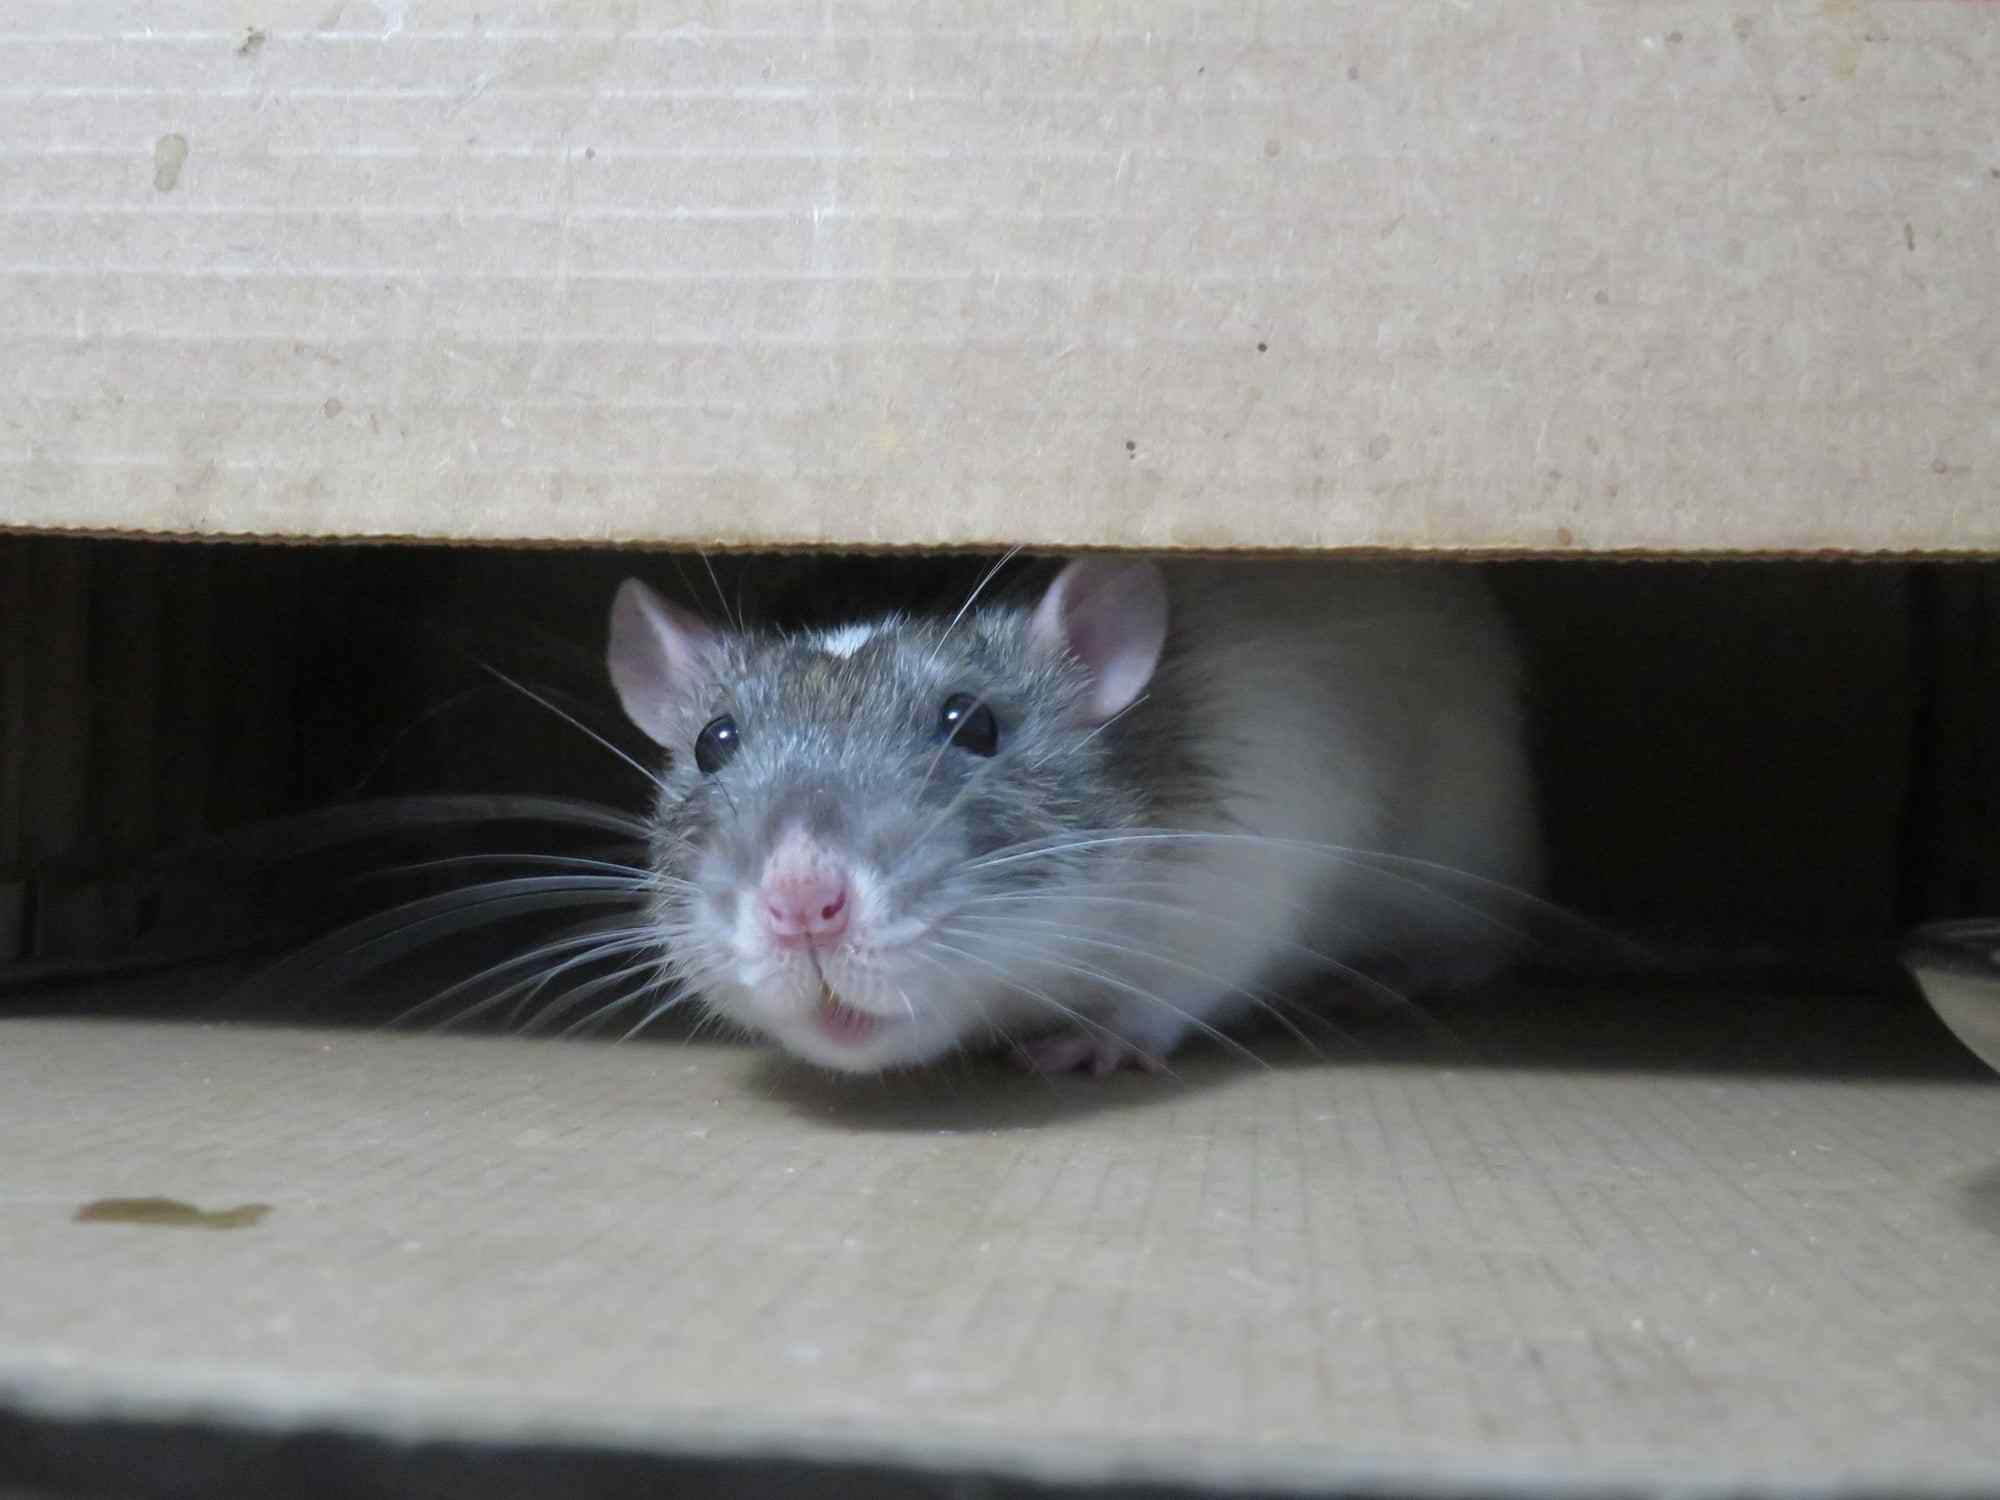 Rat hiding under a cardboard box